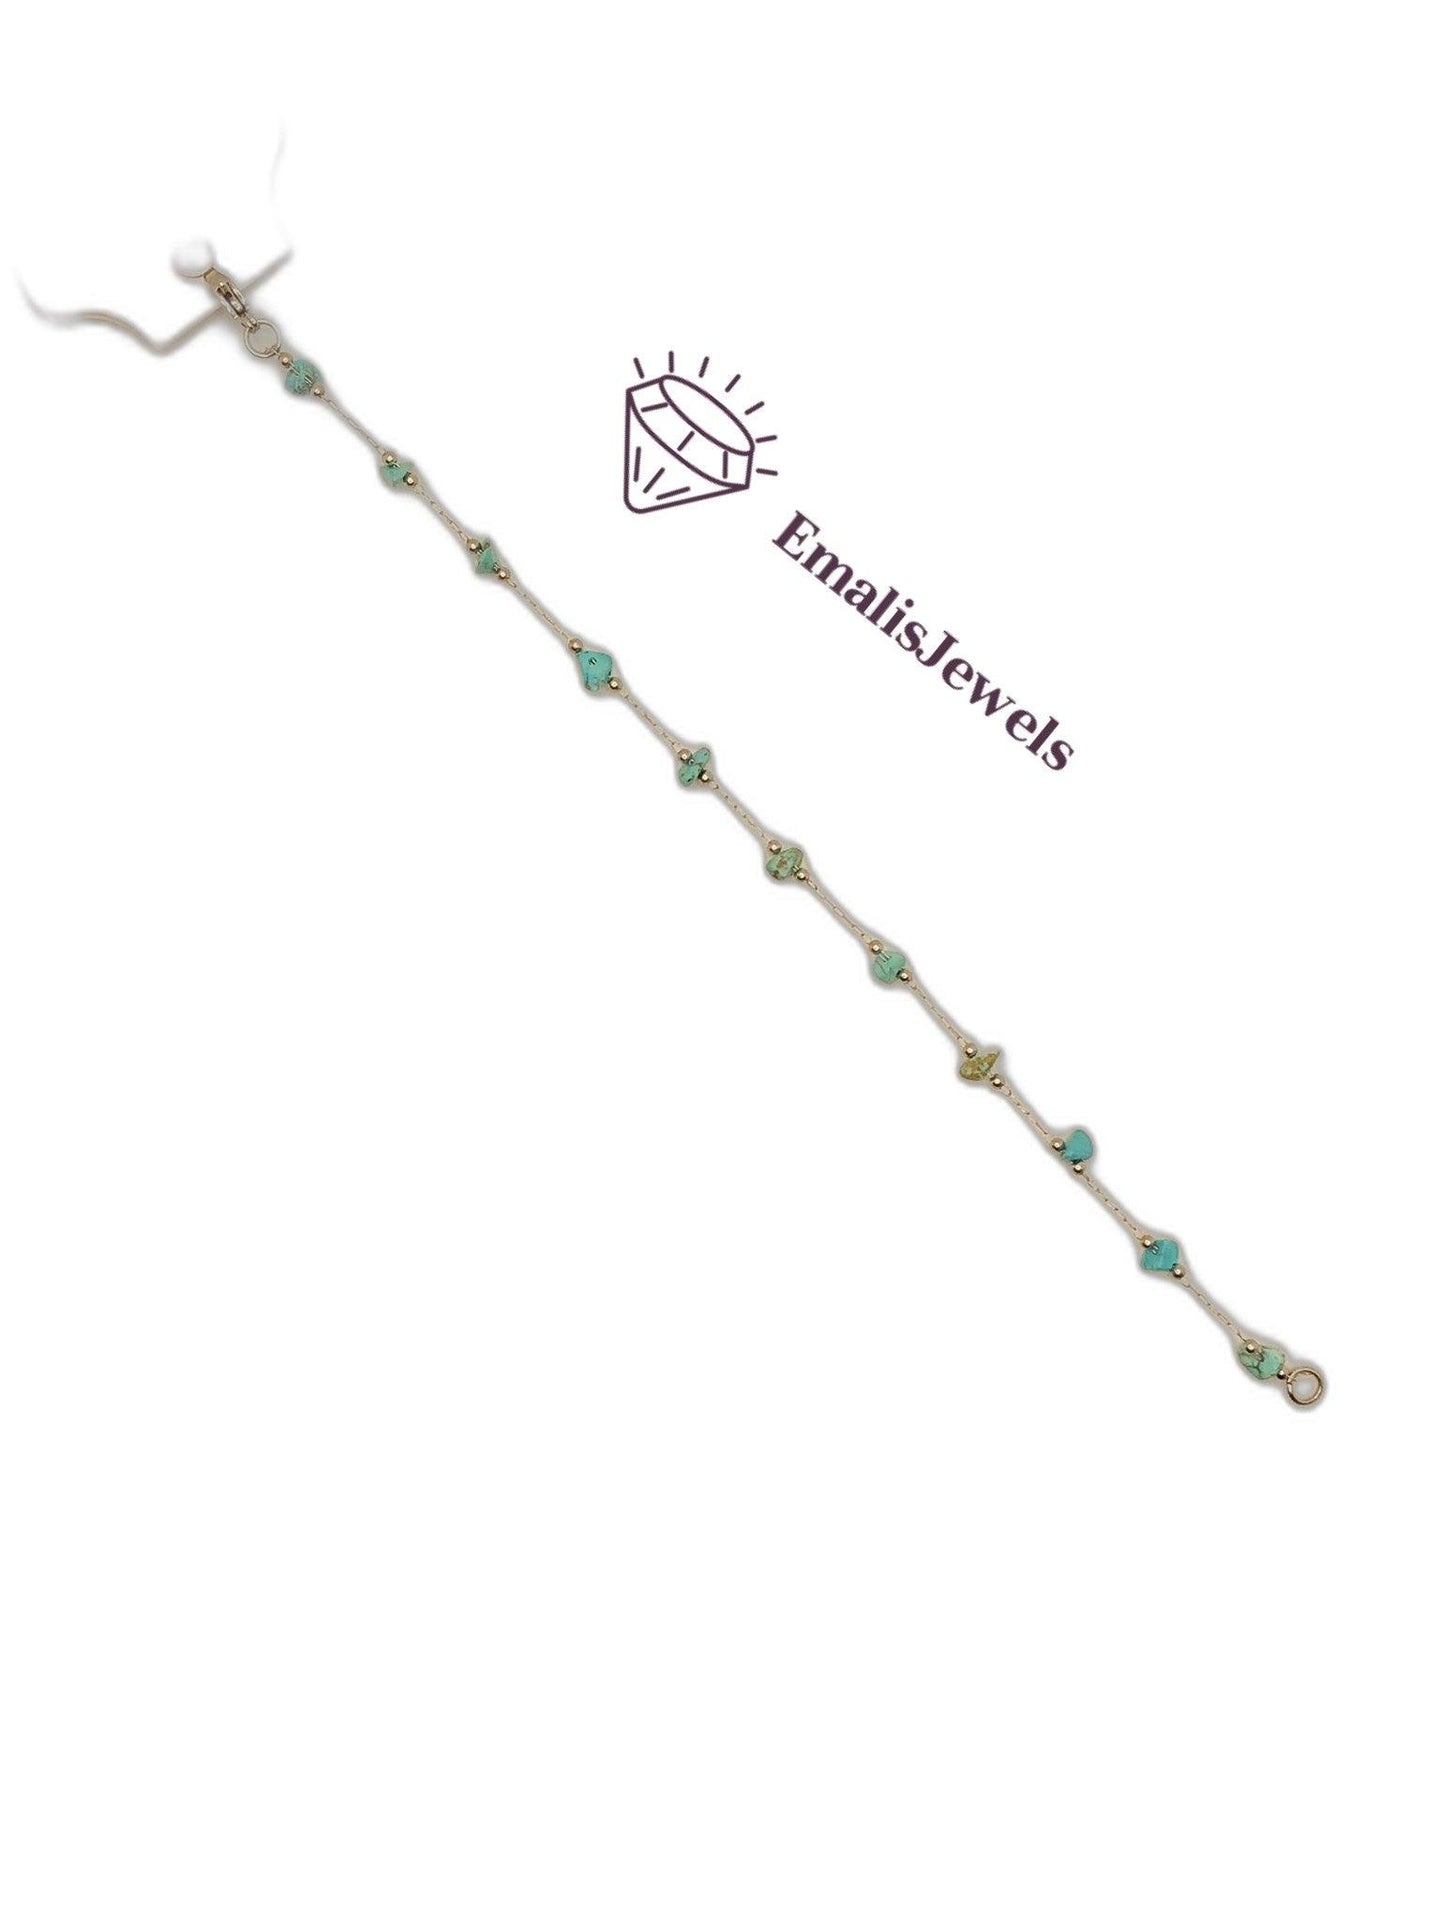 Handmade Stone Bracelets with Stainless Steel Gold overlay Chain - PremiumBrandGoods